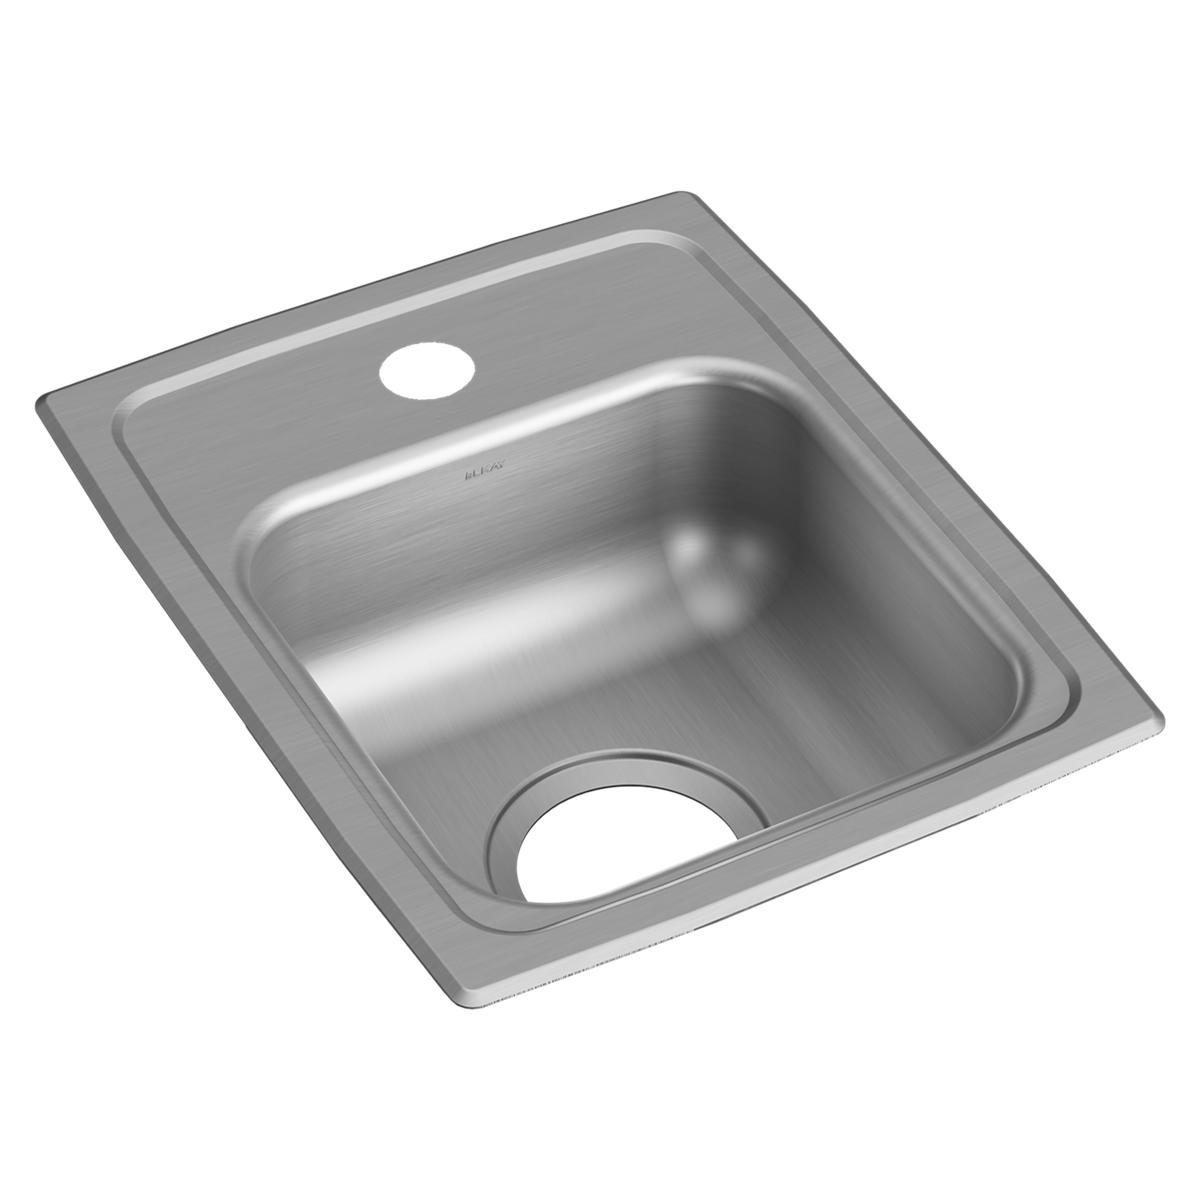 Elkay Lustertone Classic 13" x 16" x 6-1/2" MR2-Hole Single Bowl Drop-in ADA Sink